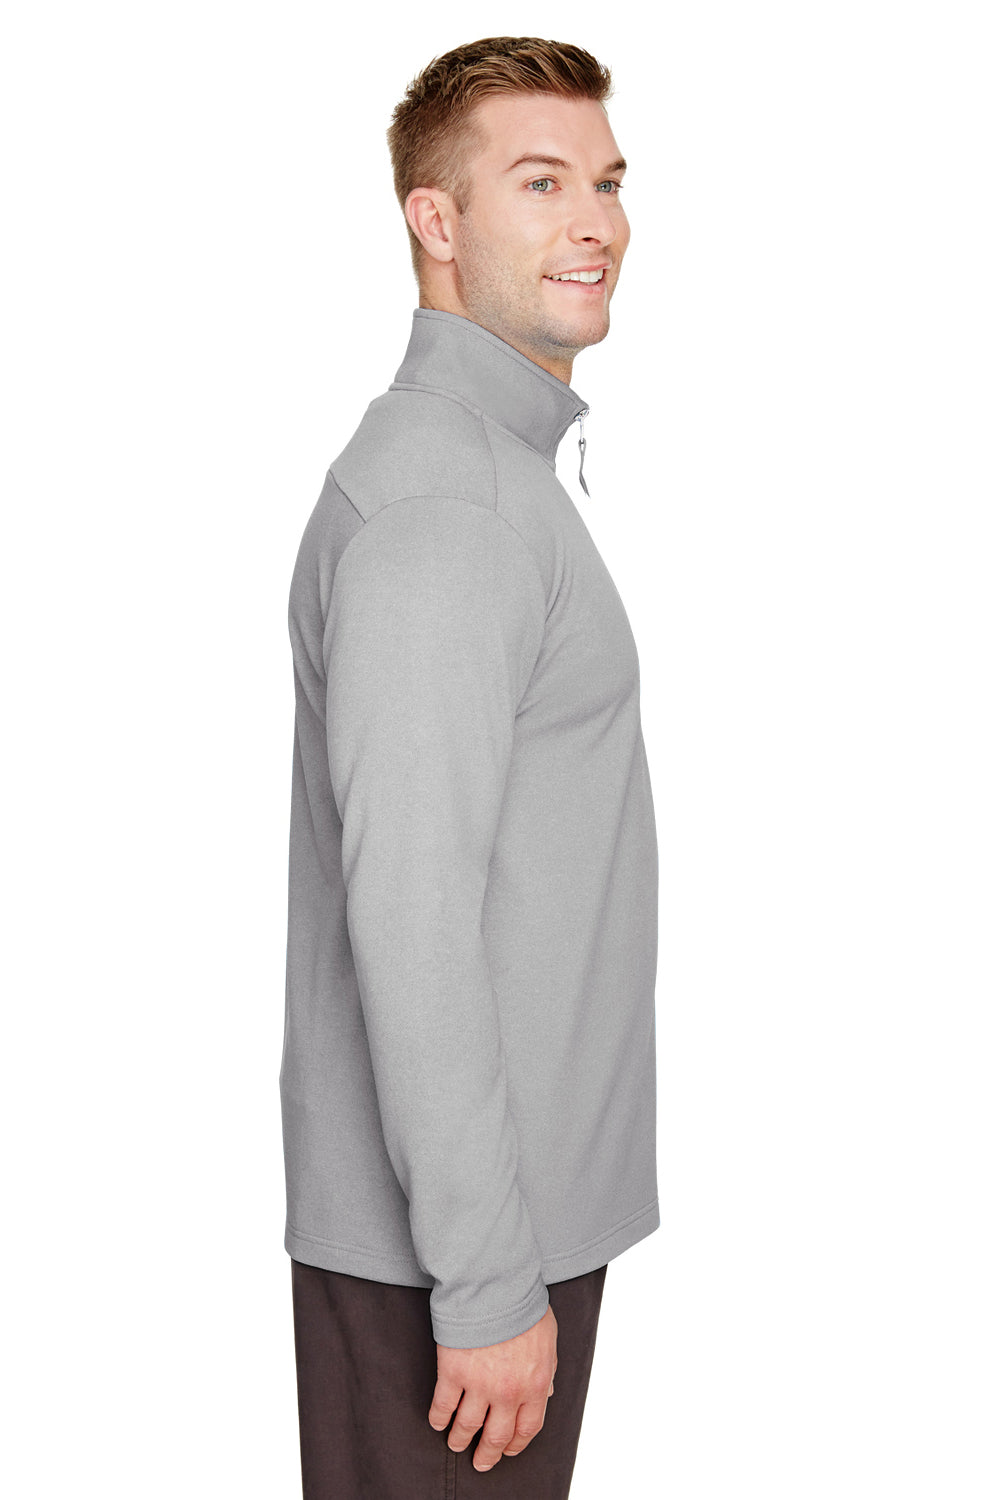 UltraClub UC792 Mens Coastal Performance Moisture Wicking Fleece 1/4 Zip Sweatshirt Silver Grey Side